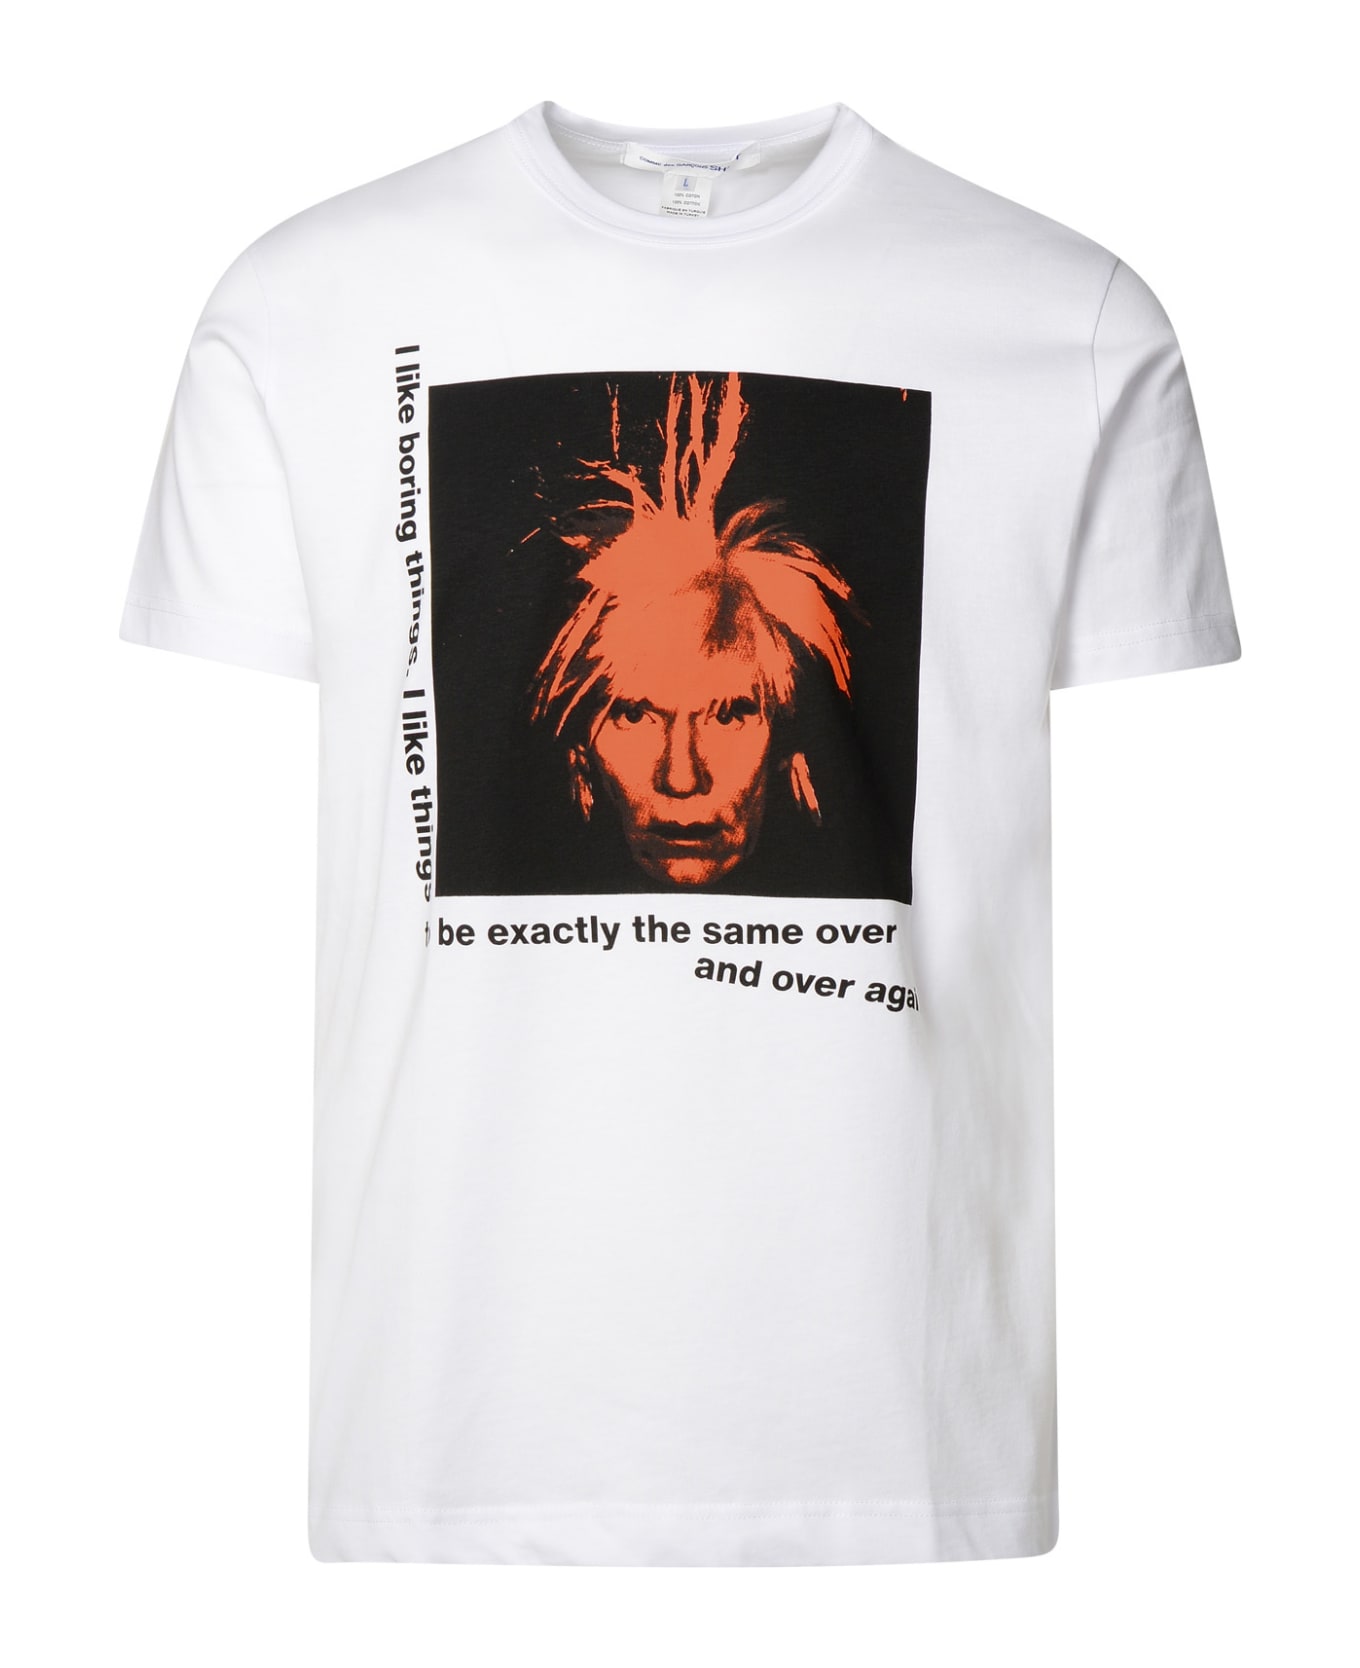 Comme des Garçons Shirt 'andy Warhol' White Cotton T-shirt - White